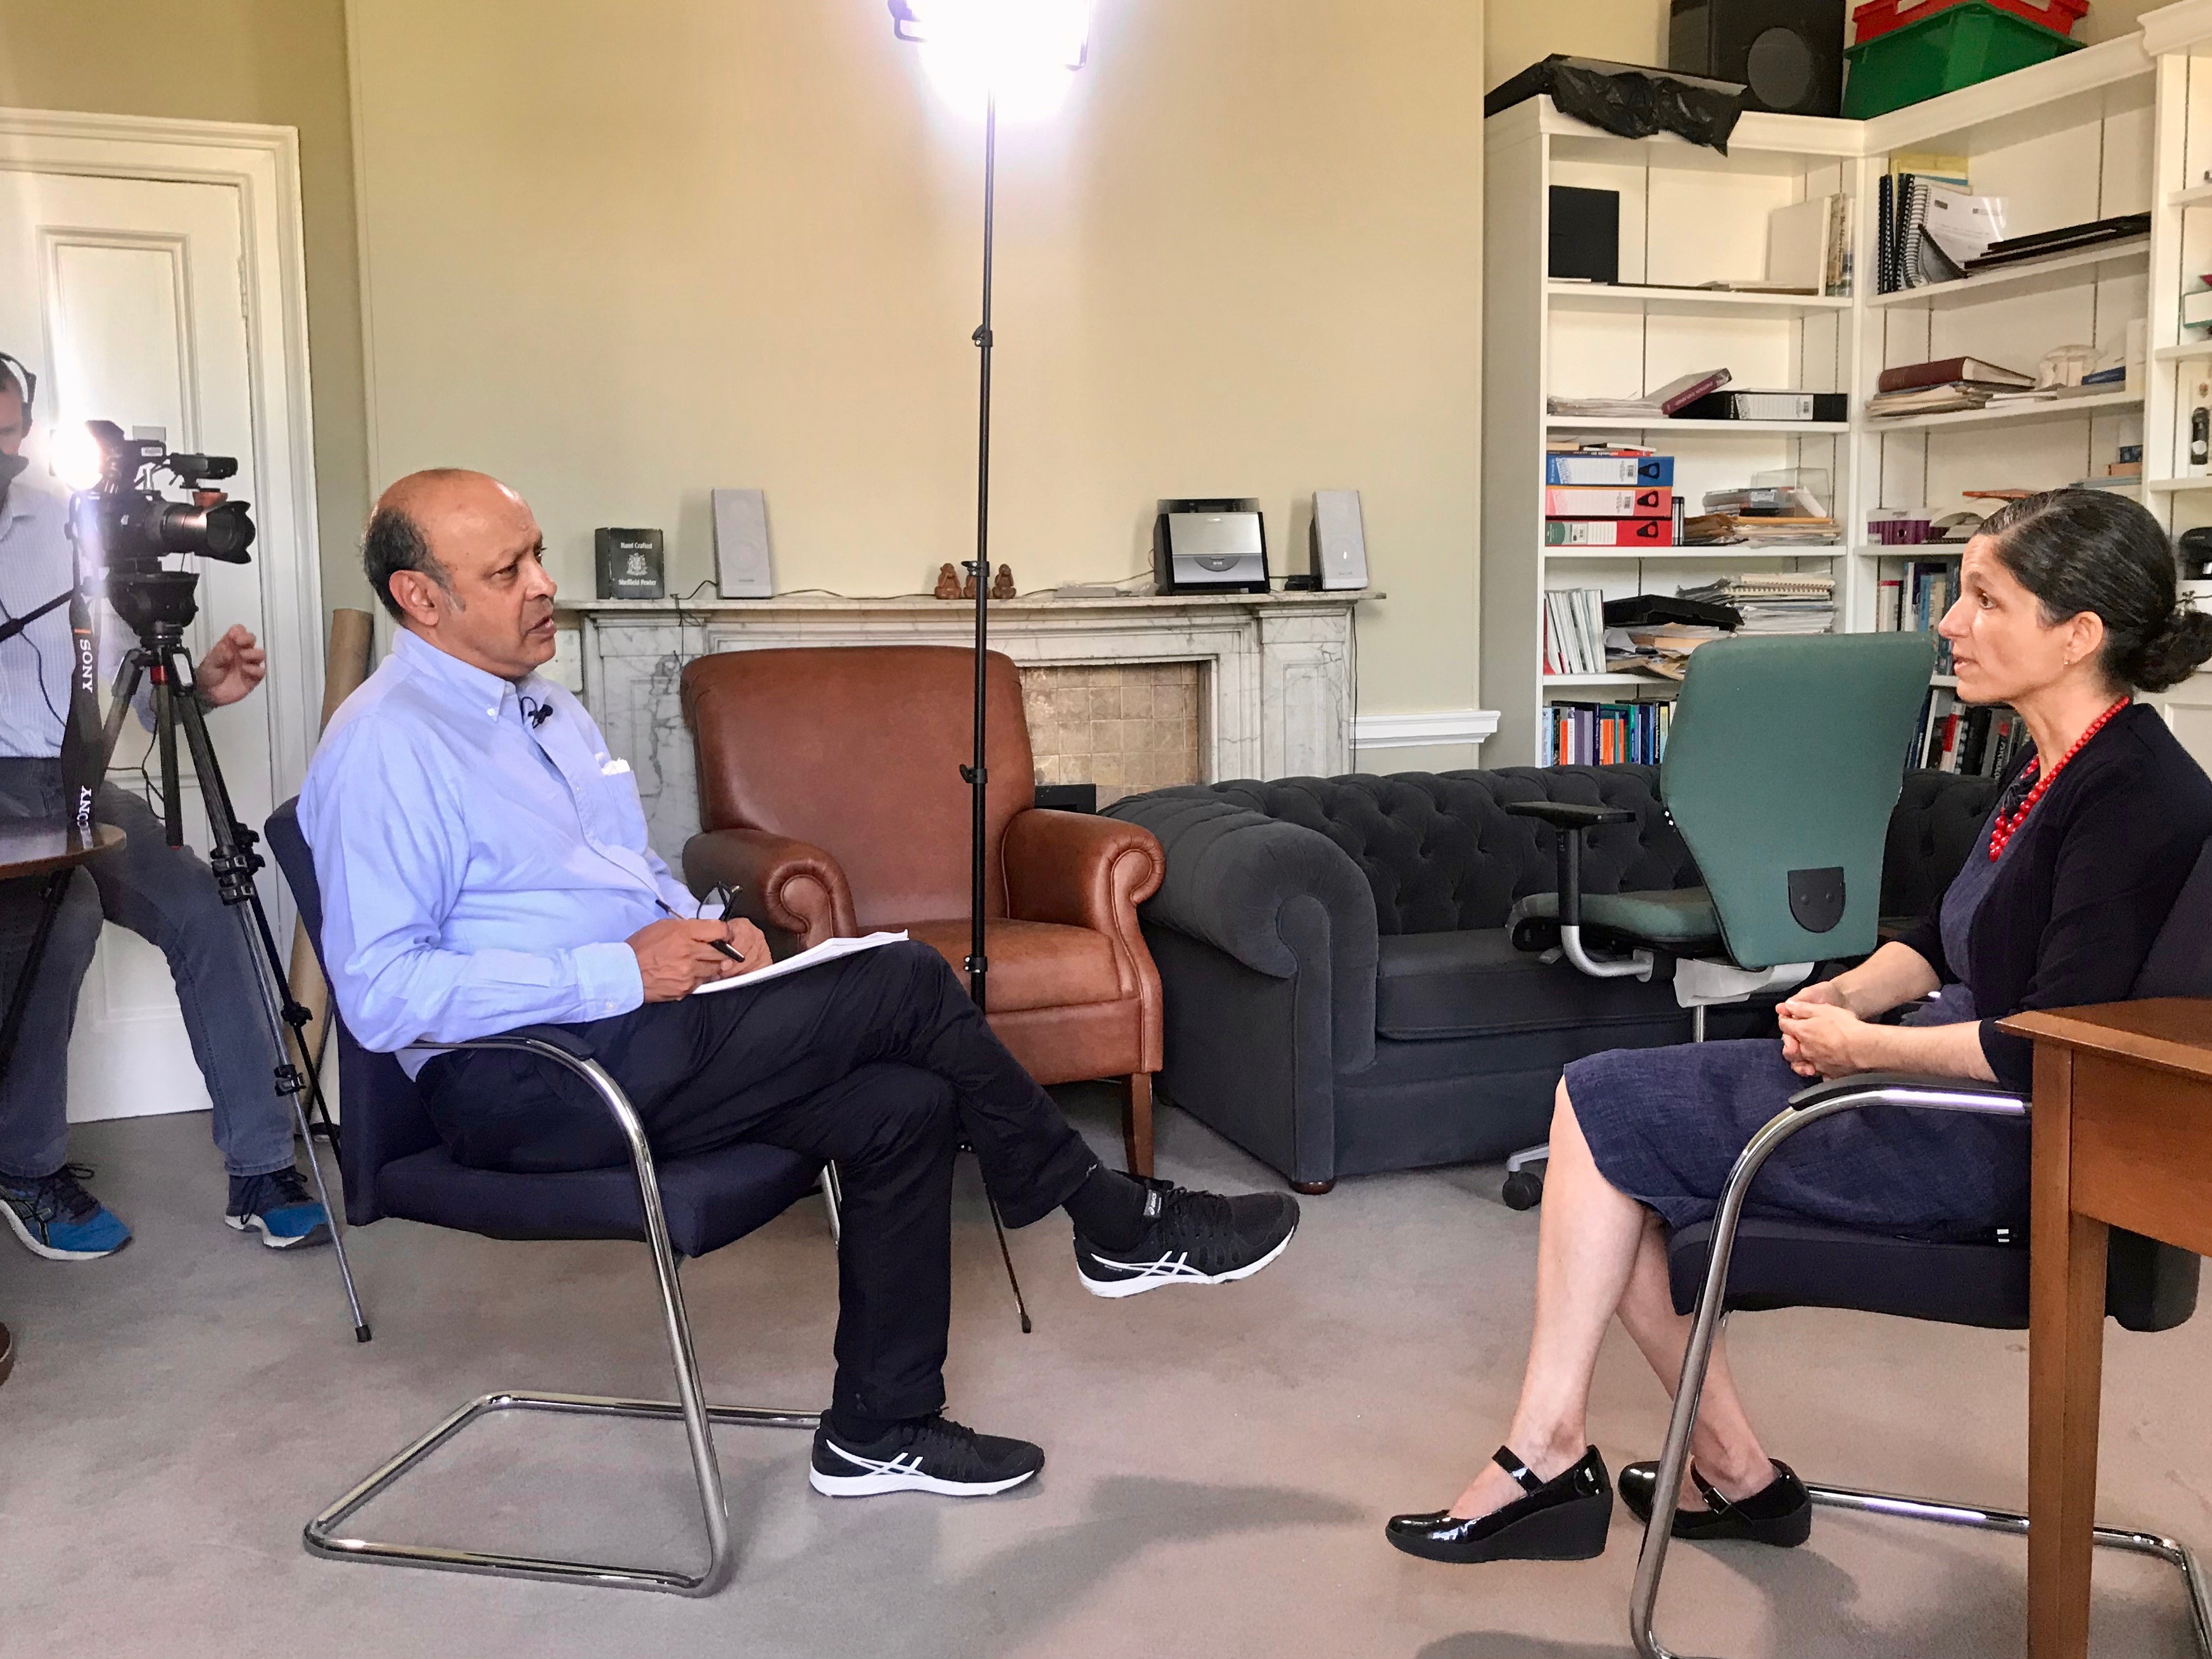 Pallab Ghosh interviewing Zoe Kourtzi on BBC Breakfast